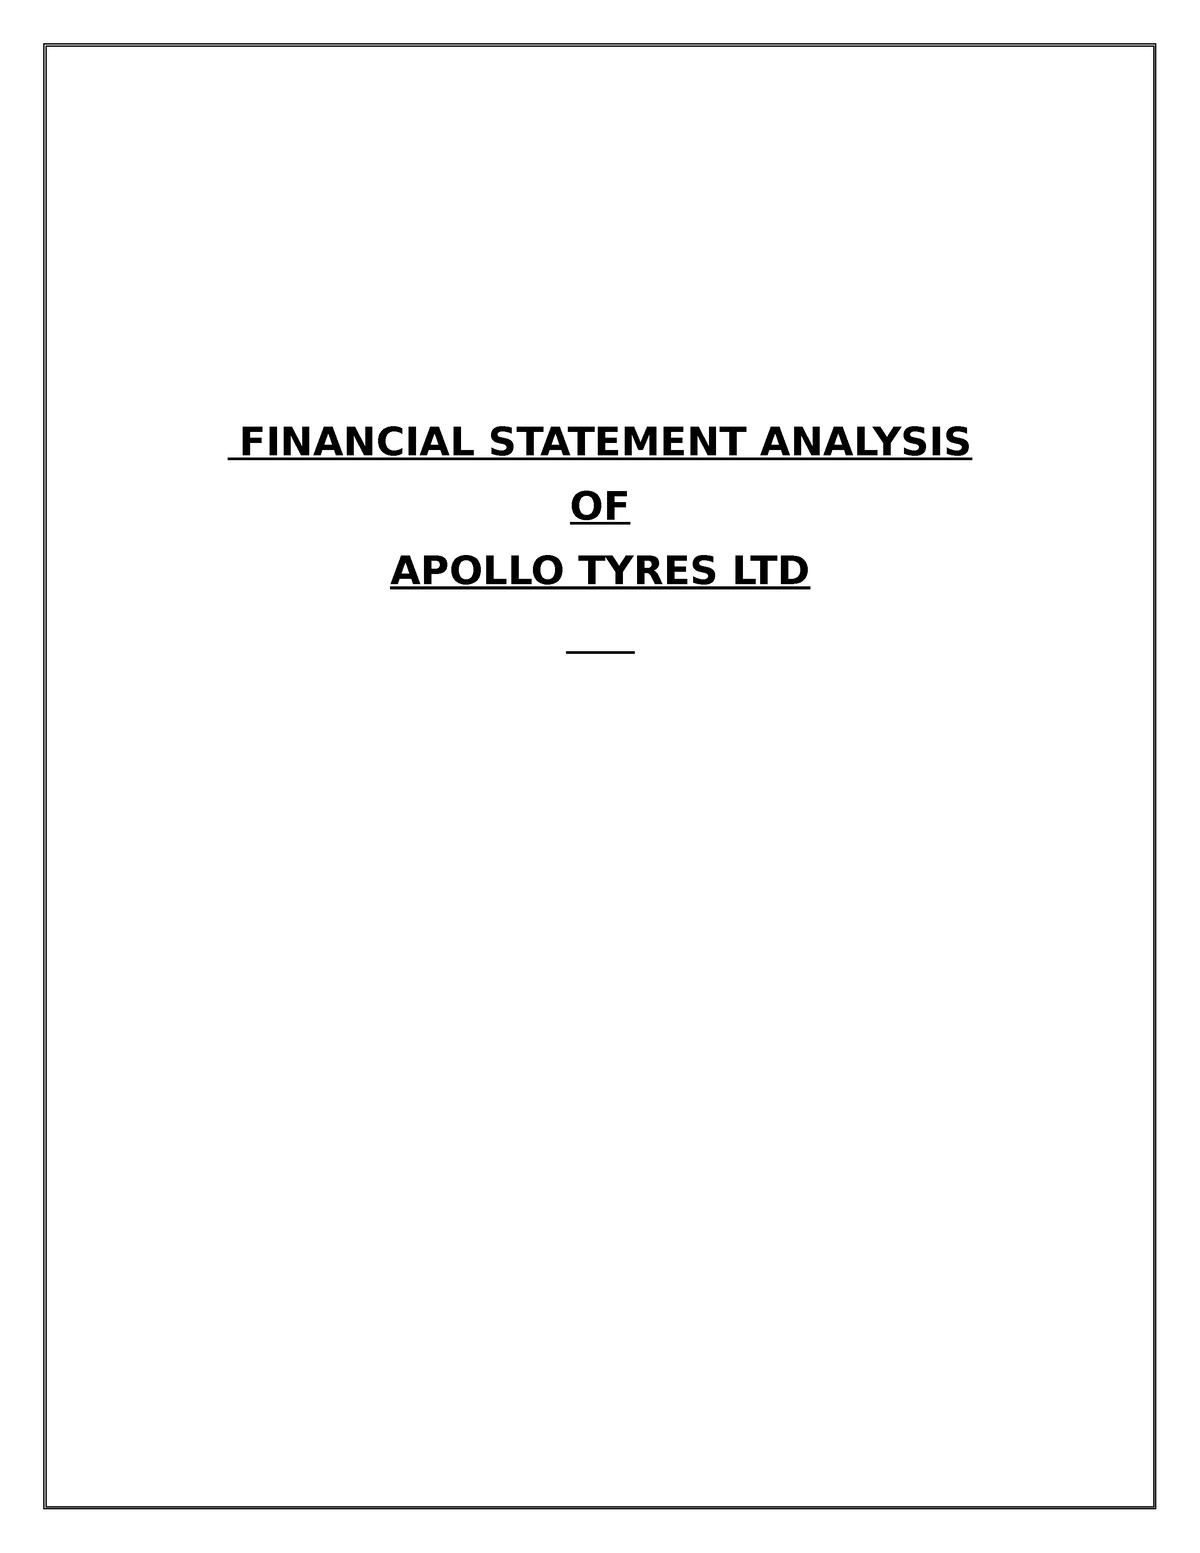 Financial statement analysis of apollo tyres - FINANCIAL STATEMENT ...